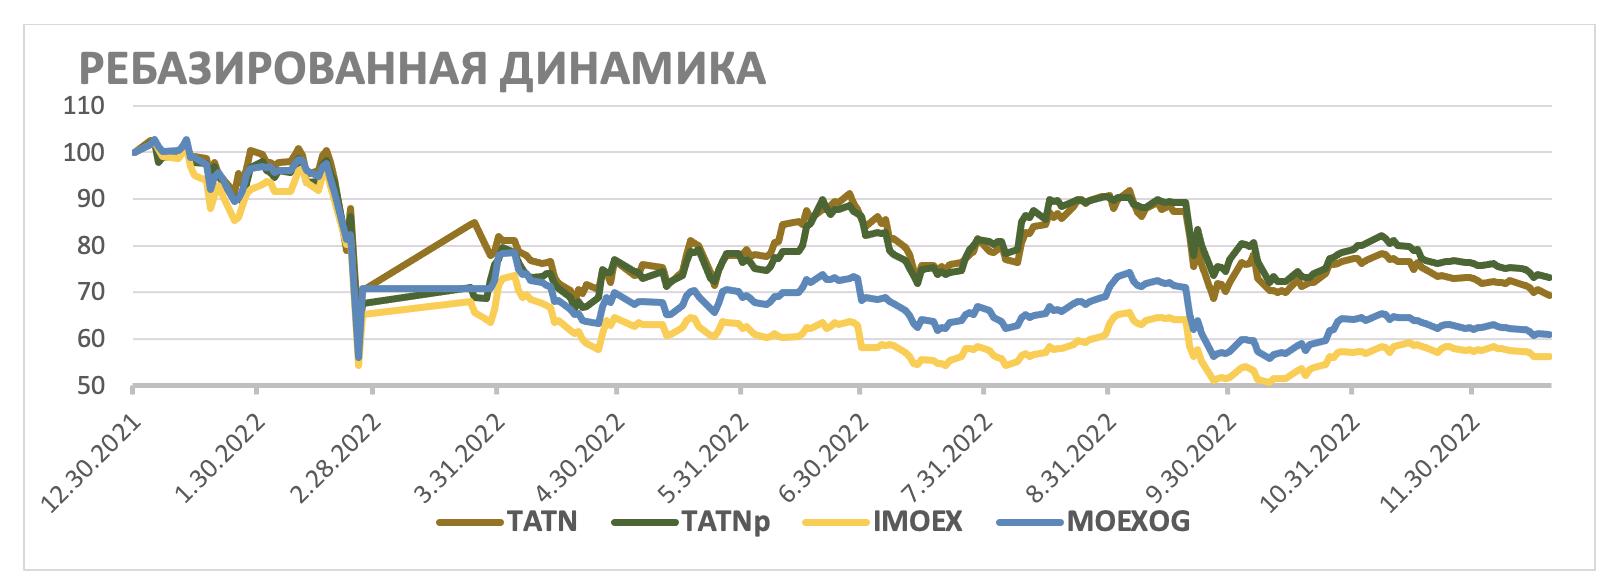 Ребазированная динамика акций Татнефти